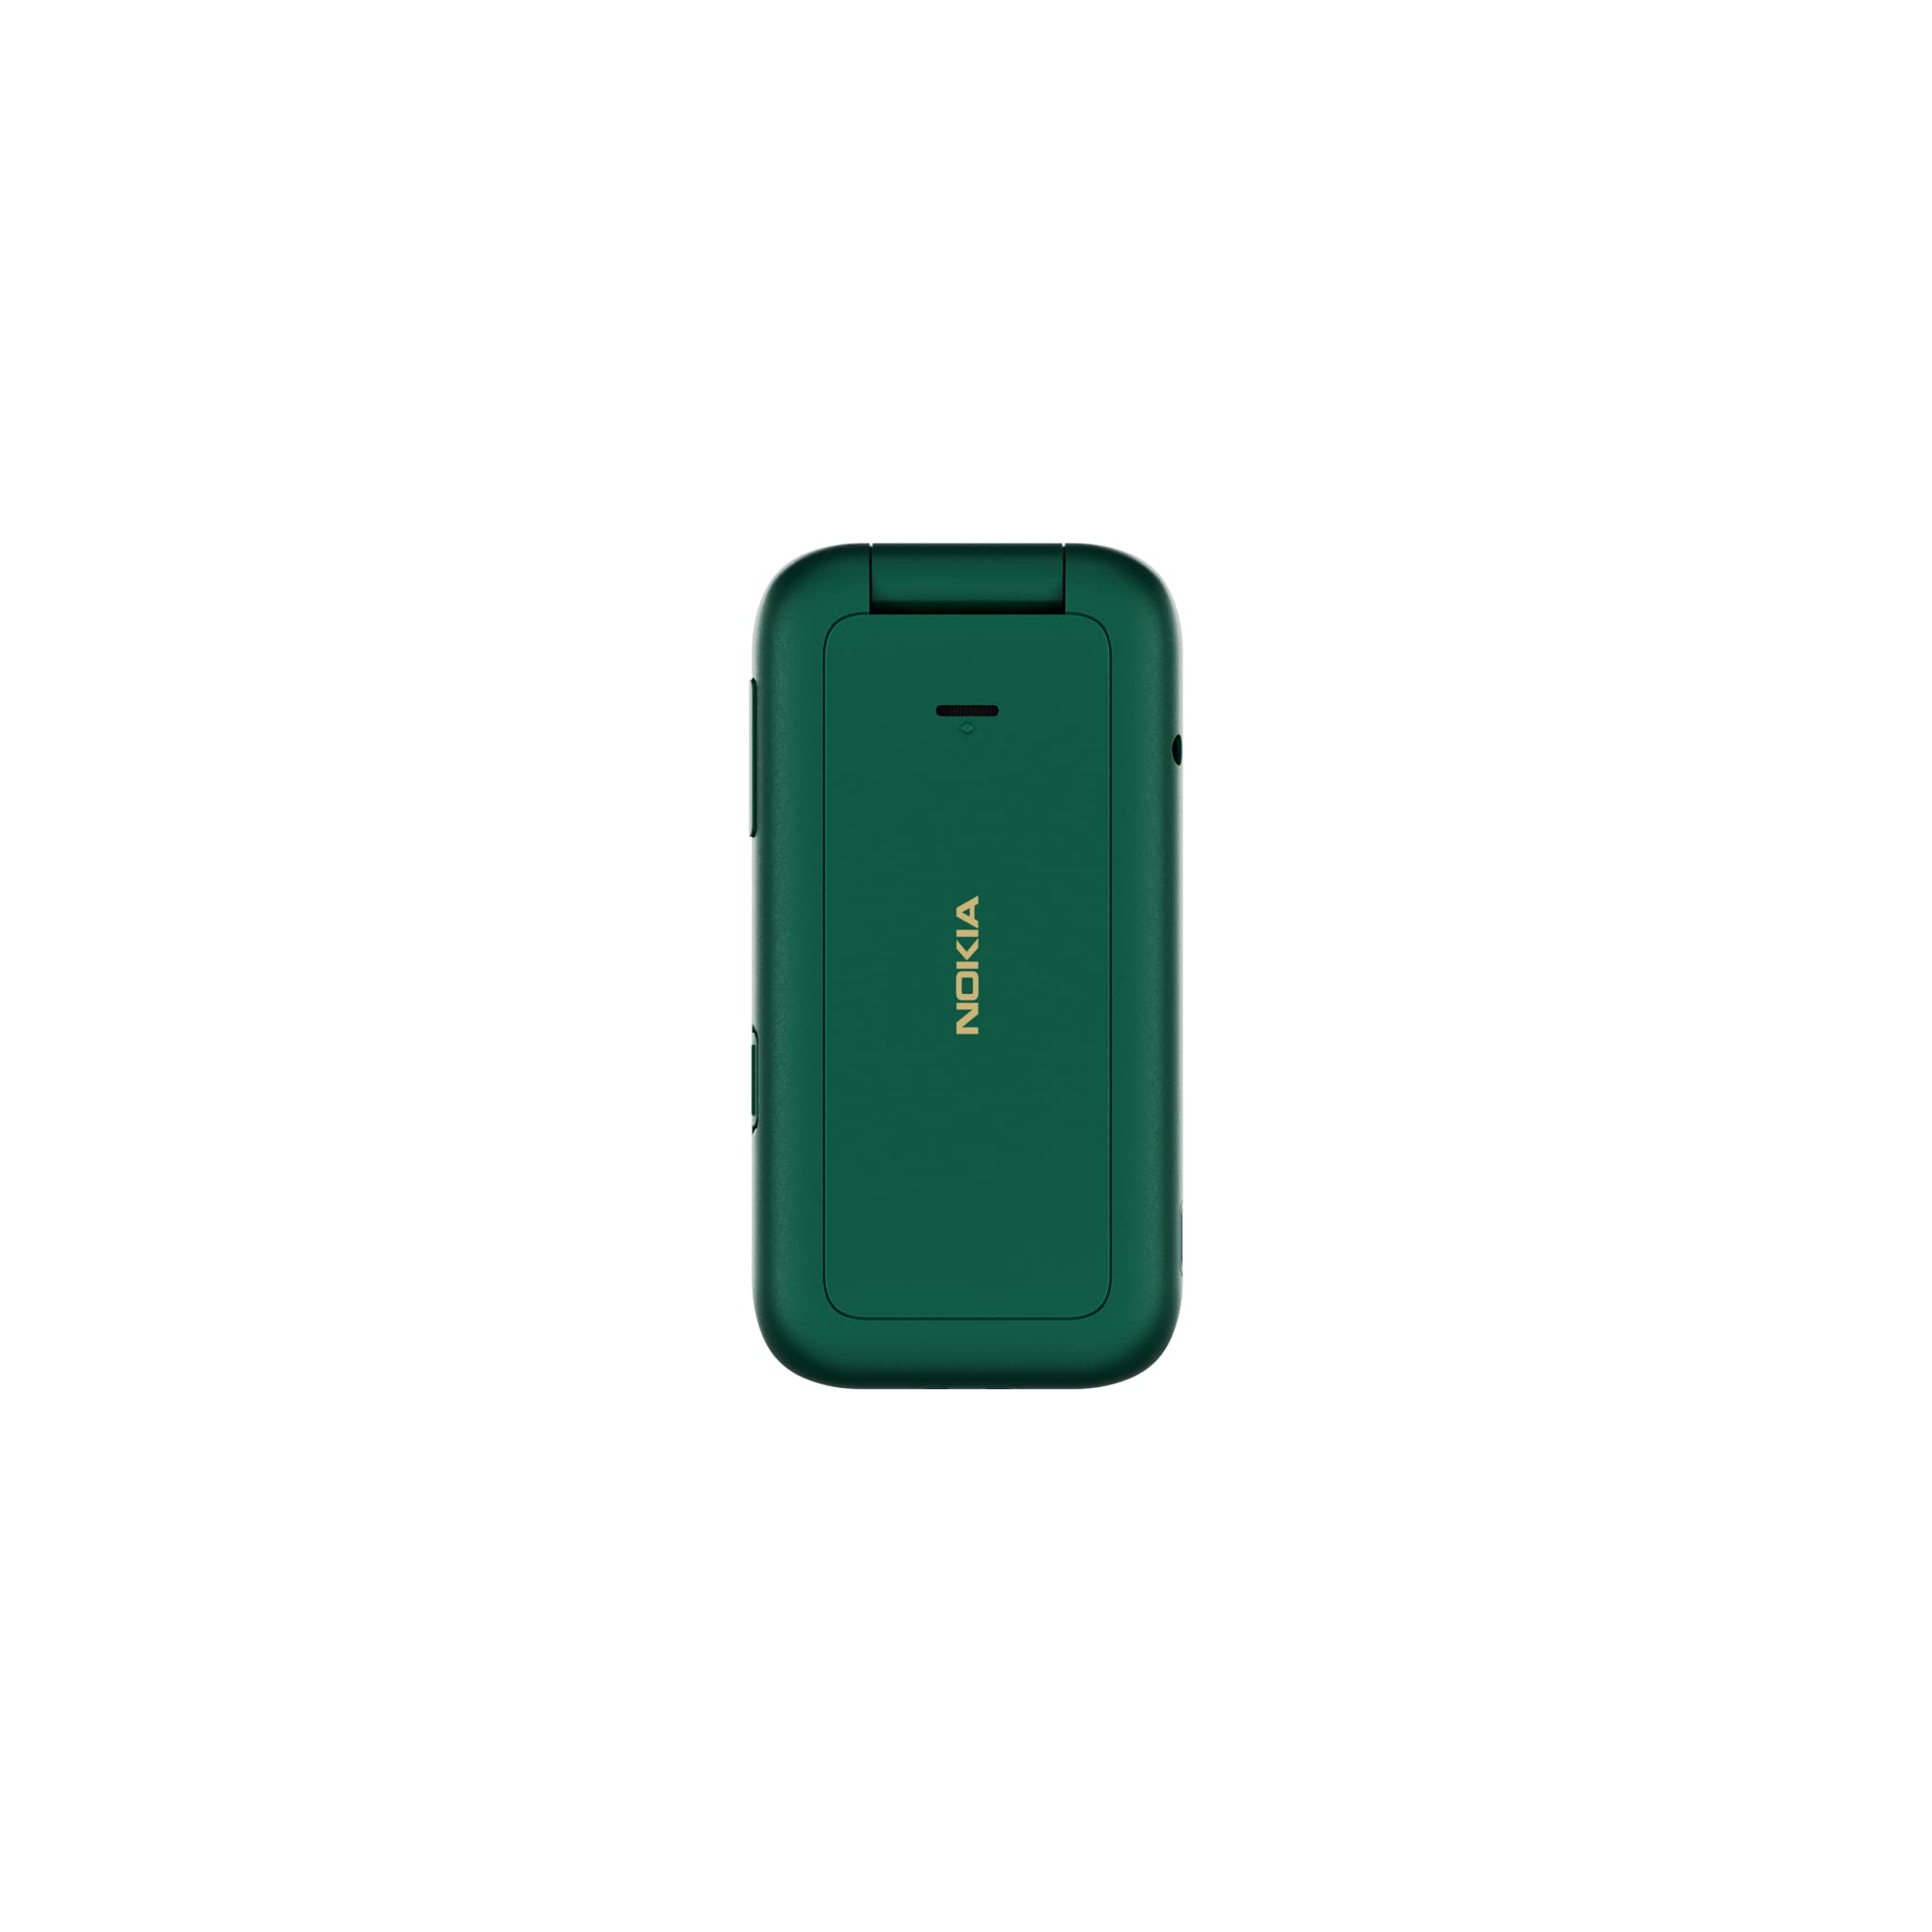 Nokia 2660 Flip Dual-SIM 128MB ROM + 48MB RAM (GSM Only | No CDMA) Factory Unlocked Android 4G/LTE Smartphone (Lush Green) - International Version